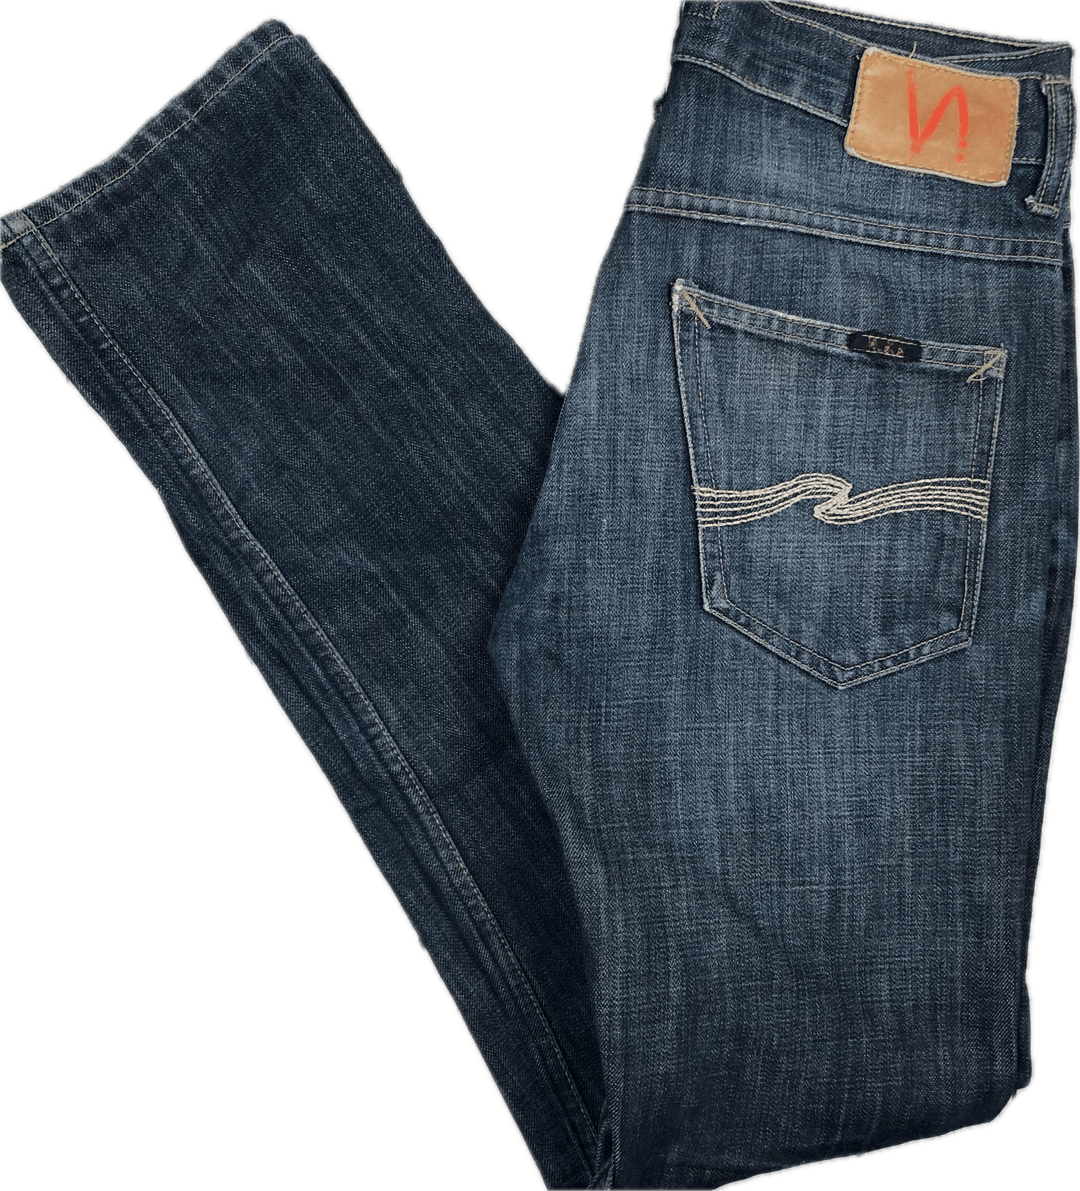 Nudie Jeans Co. 'Regular Ralf' Dry Wash Jeans - Size 30 - Jean Pool